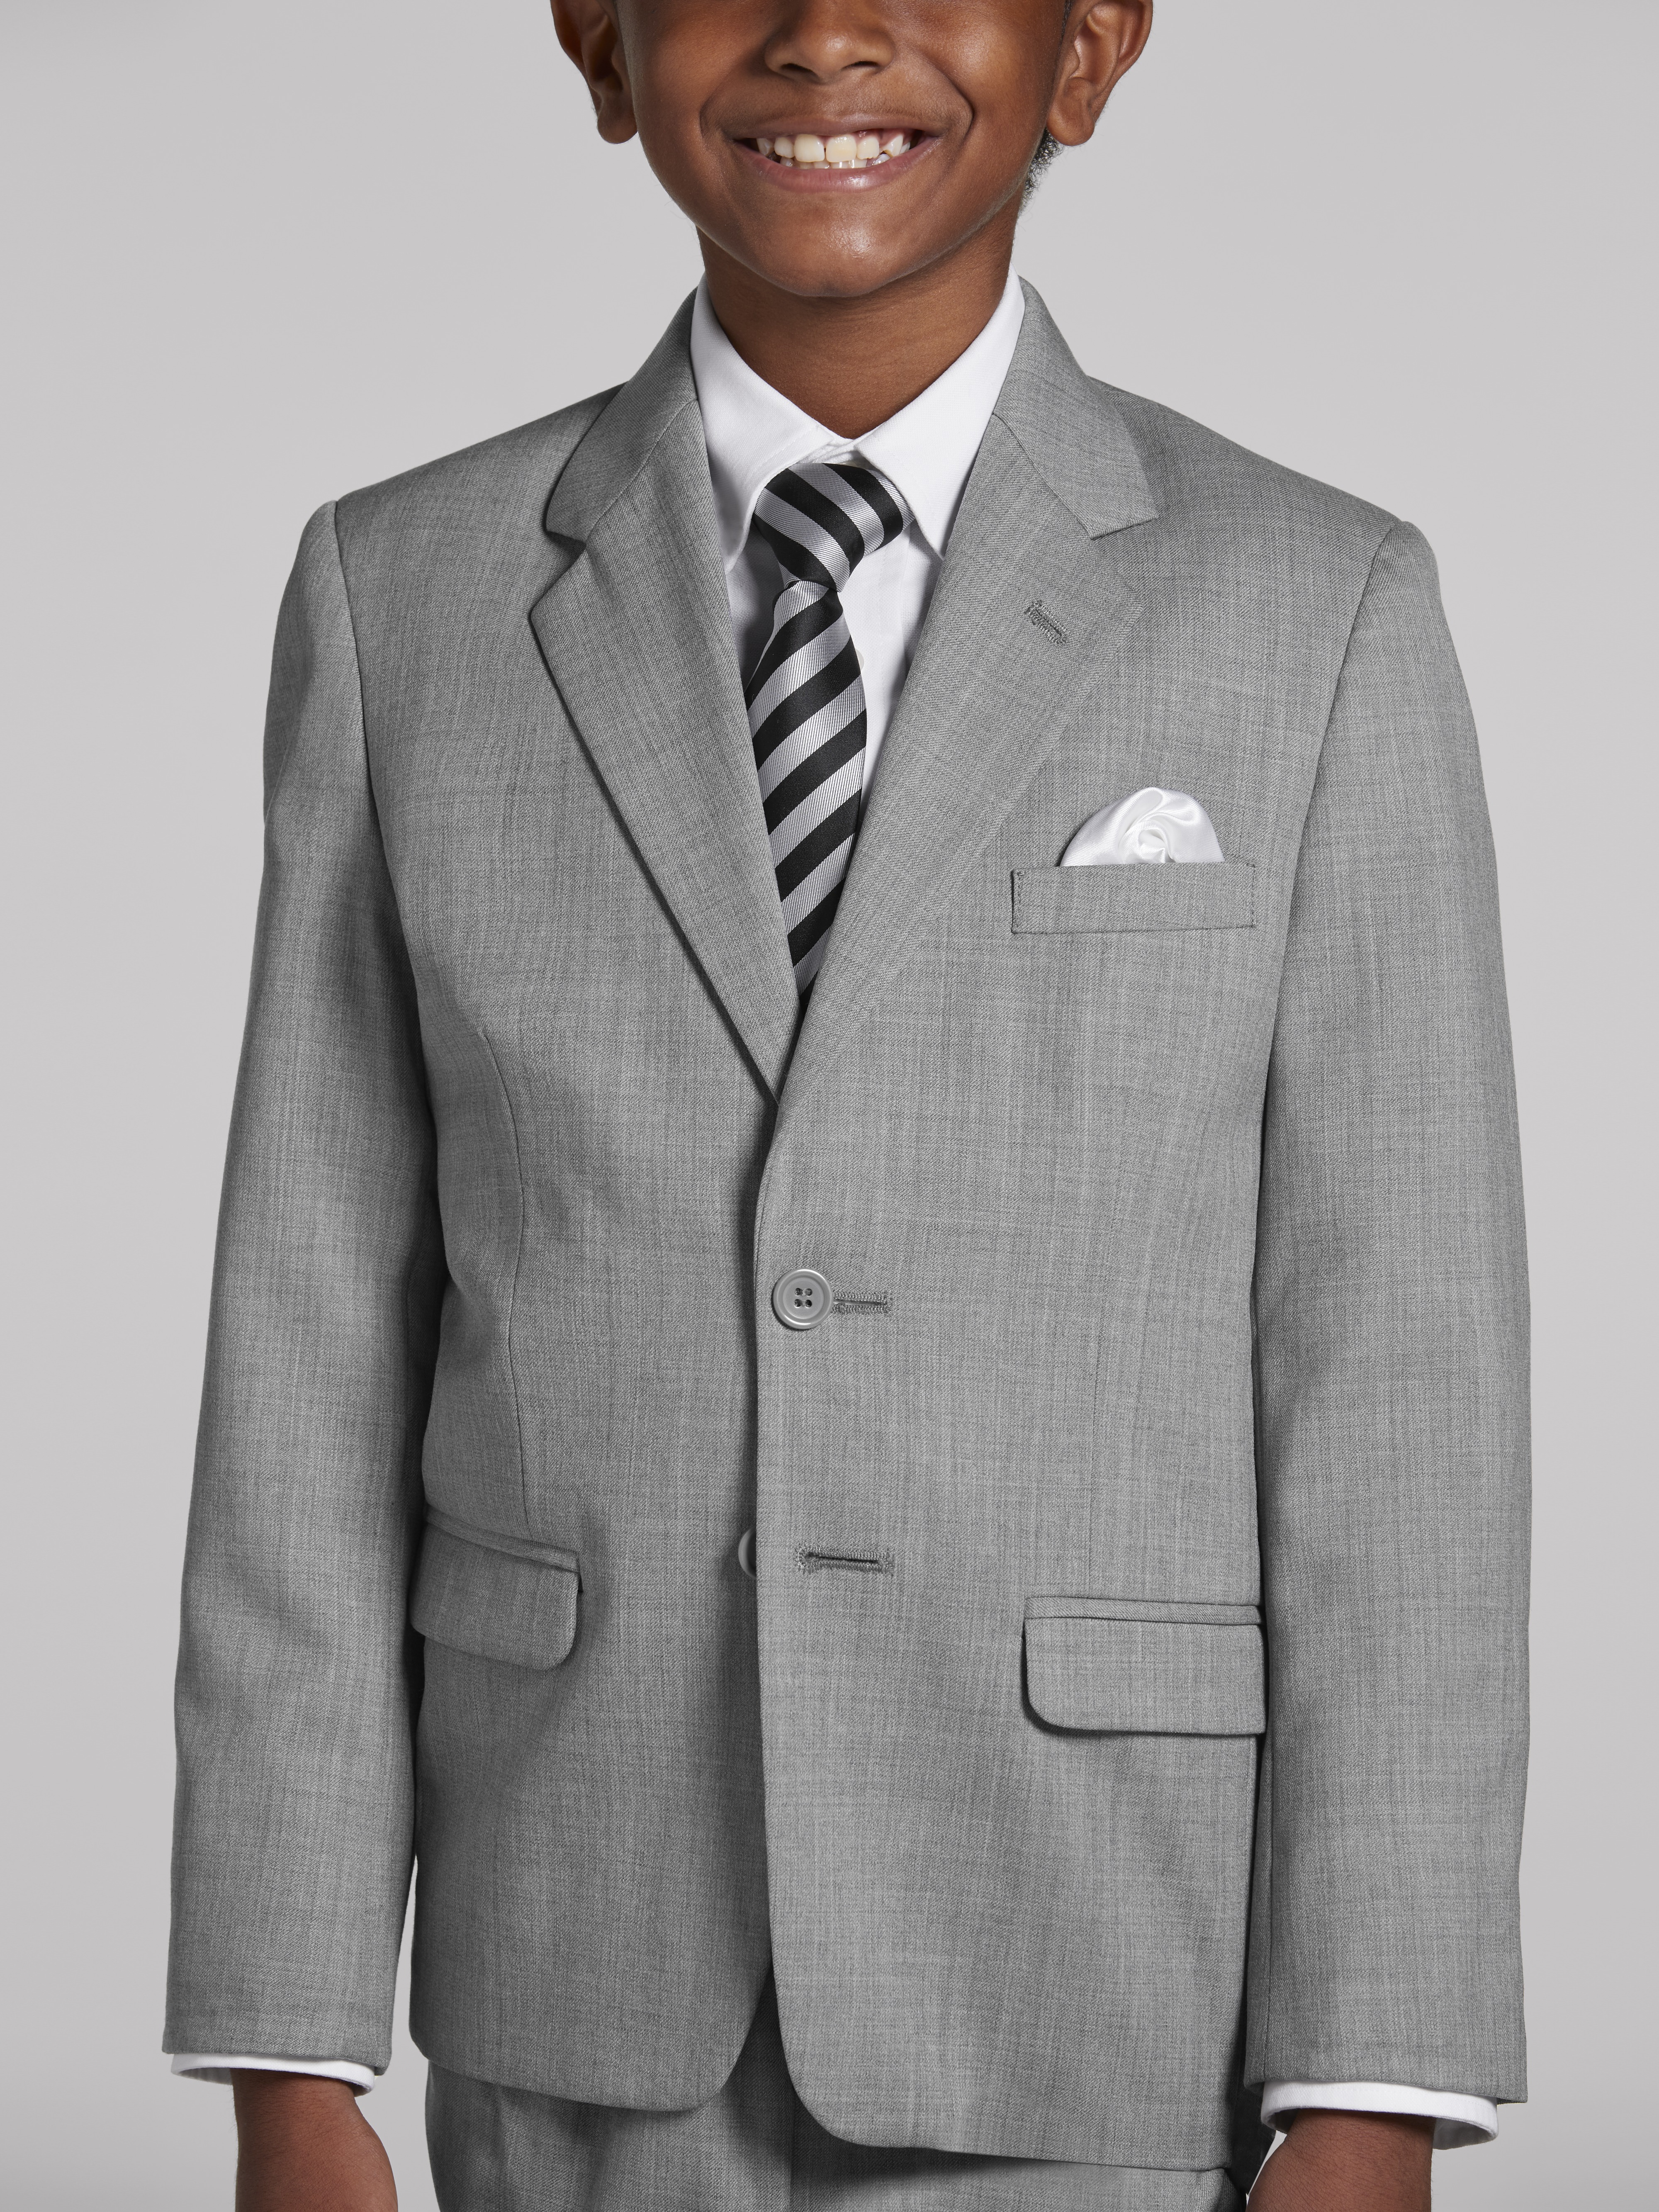 Boy's Grey Suit Rental by Joseph & Feiss